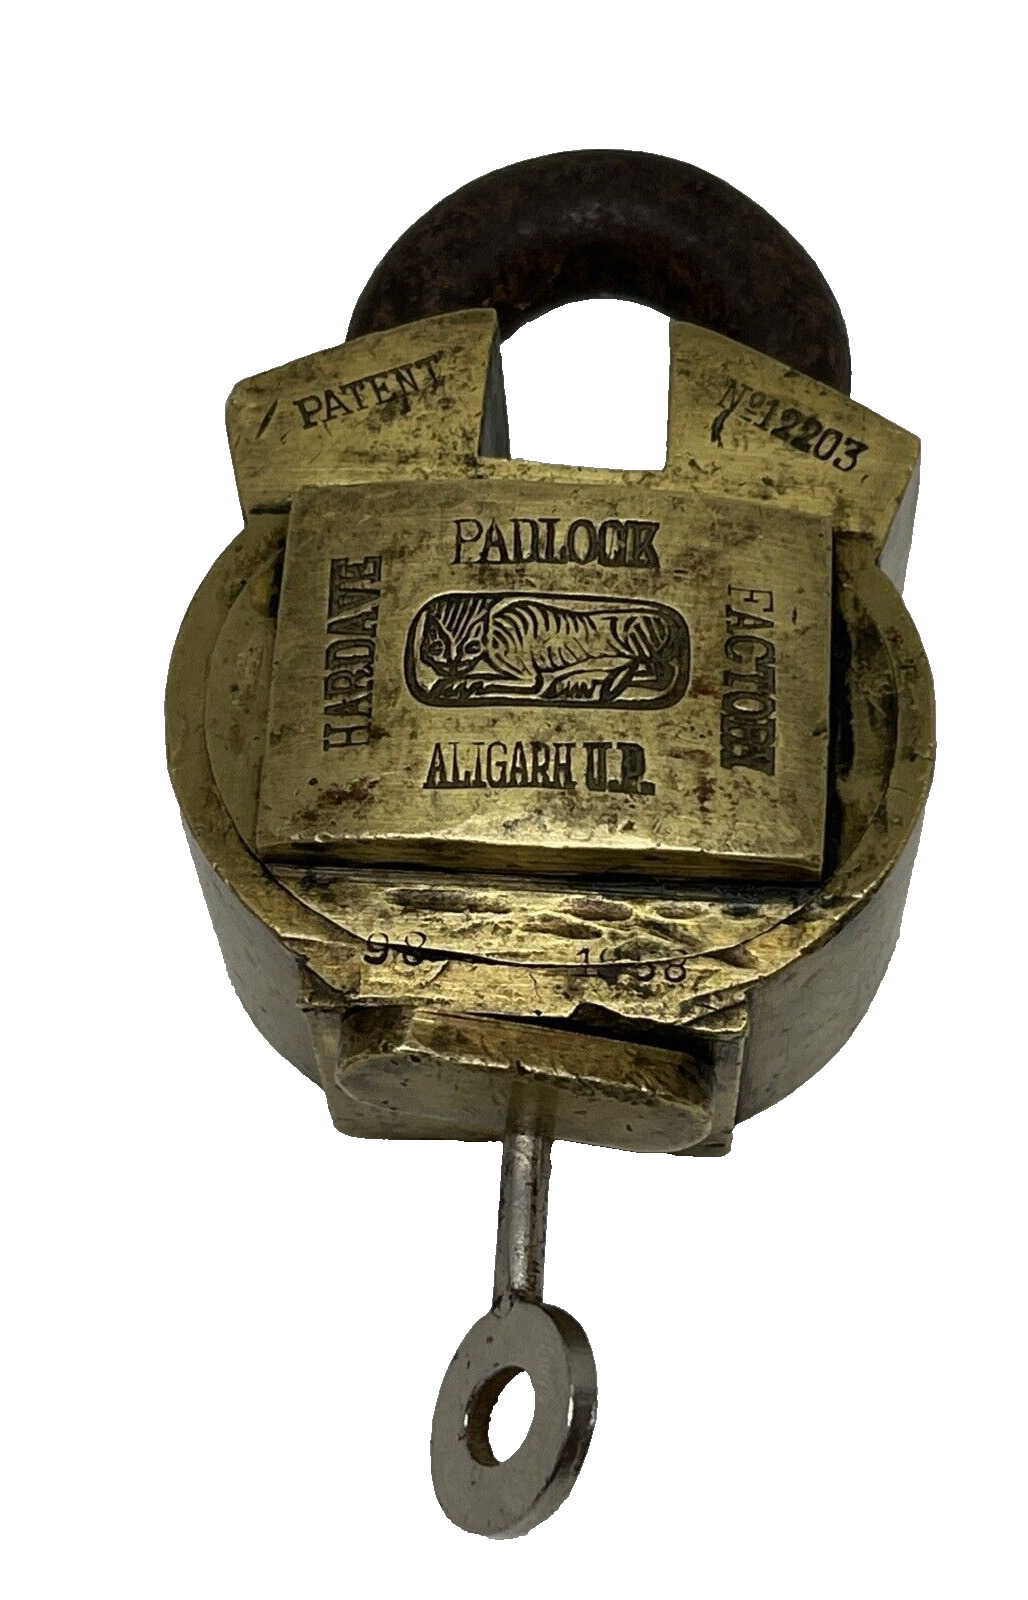 Vintage Padlock - 1958 Patent 12203 -  Hardave Padlock Factory Aligarh With Key